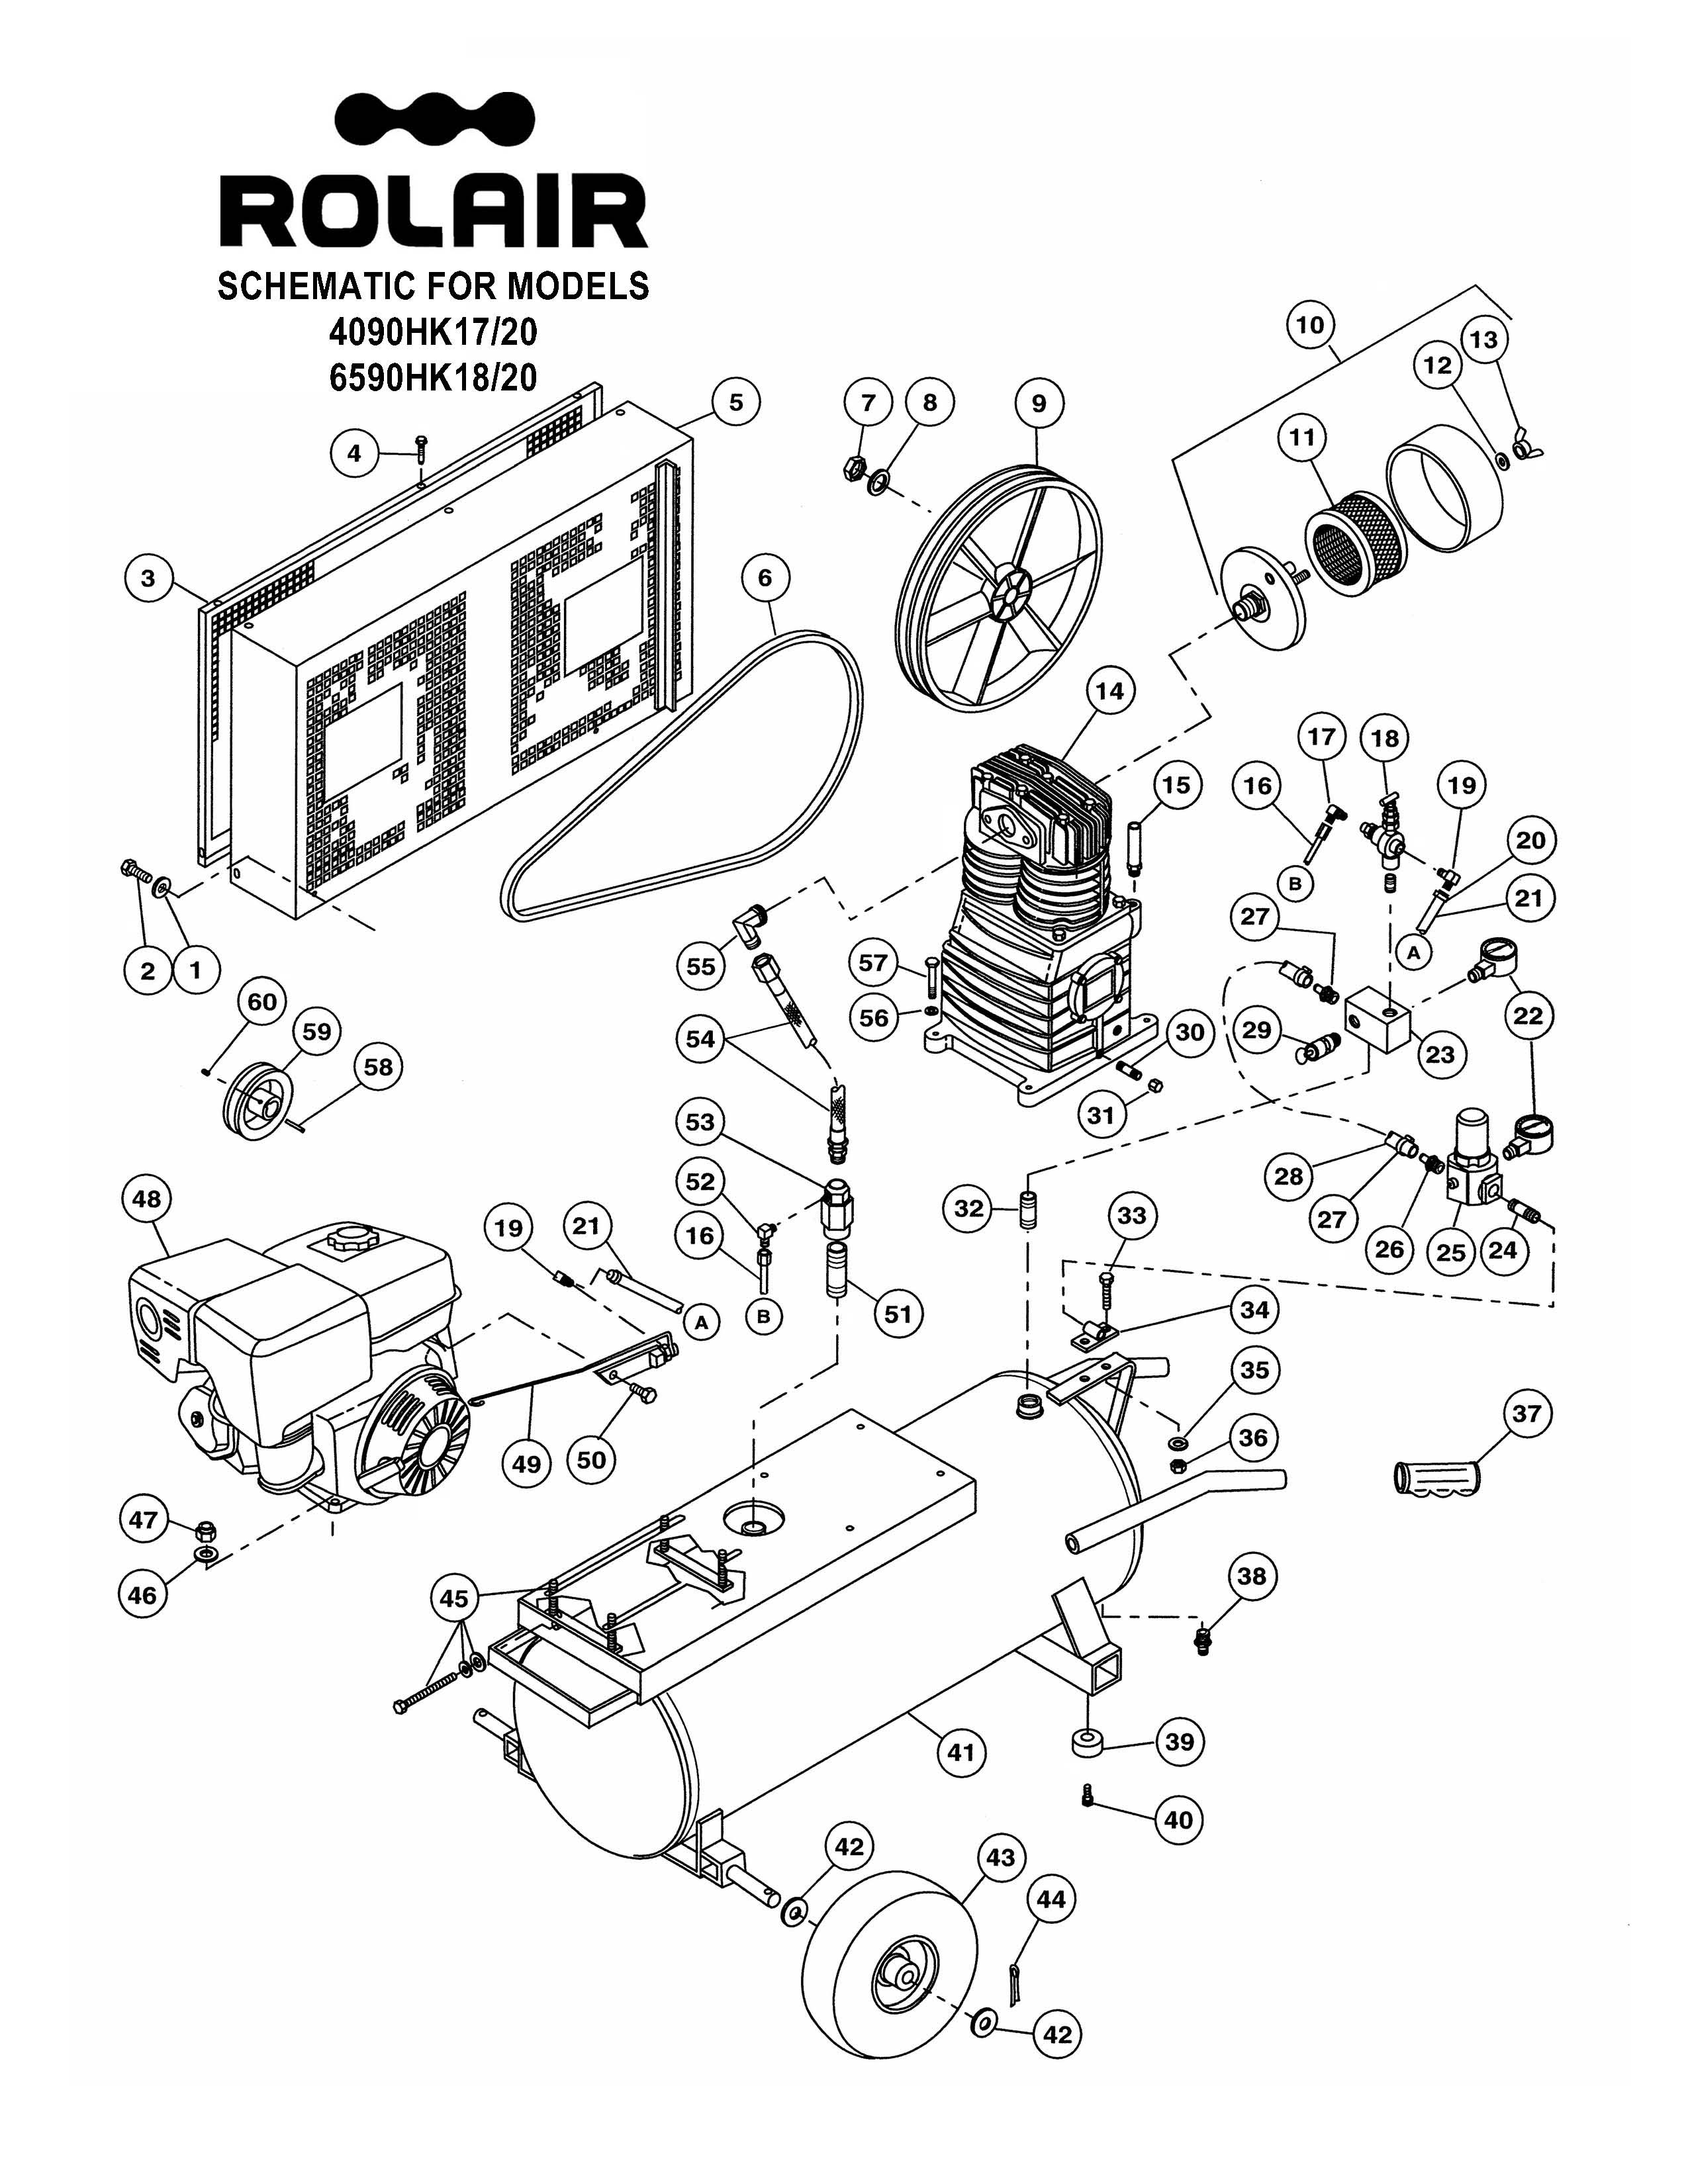 Honda Gx120 Parts Diagram 6590hk1820 6590hk18 20 Rolair Air Pressor Parts Of Honda Gx120 Parts Diagram